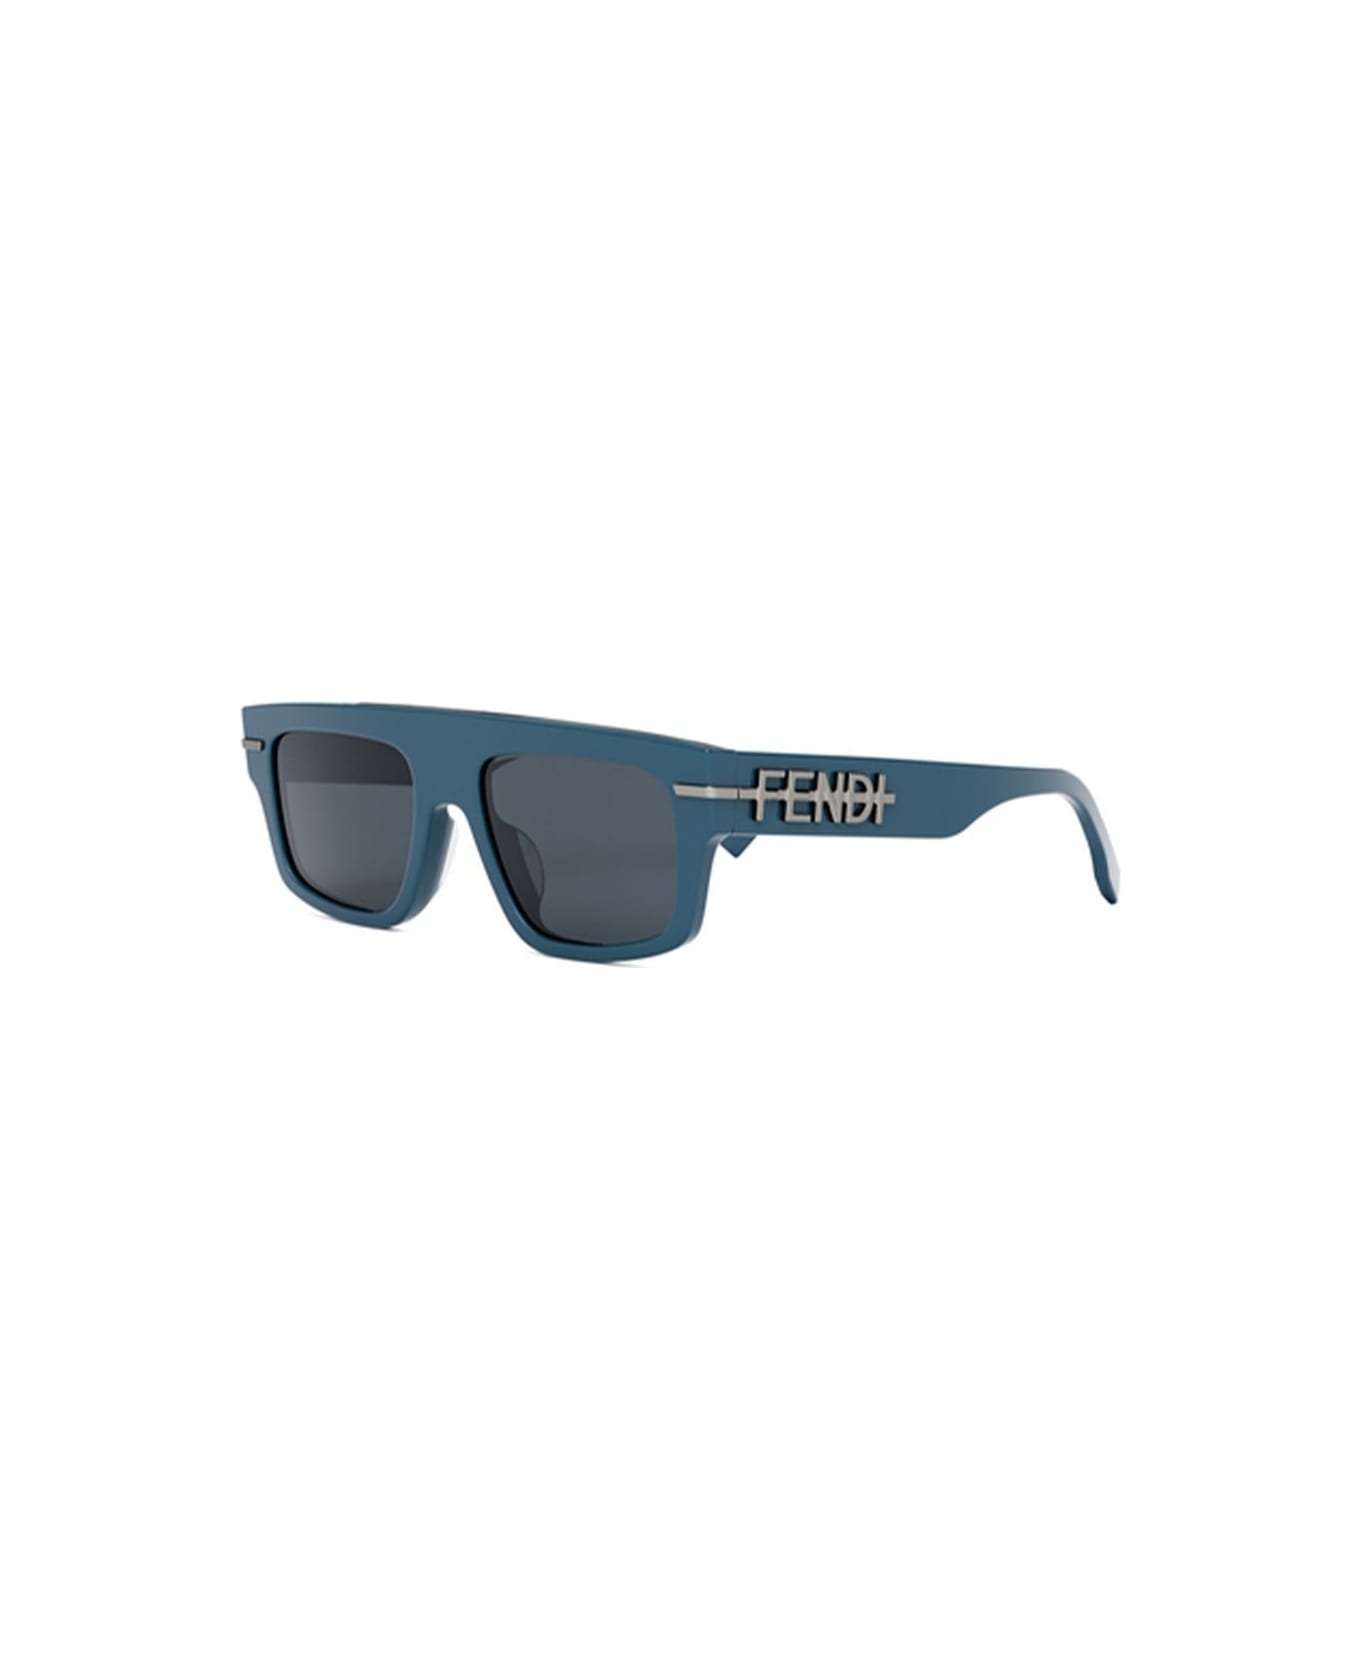 Fendi Eyewear Sunglasses - Verde/Grigio